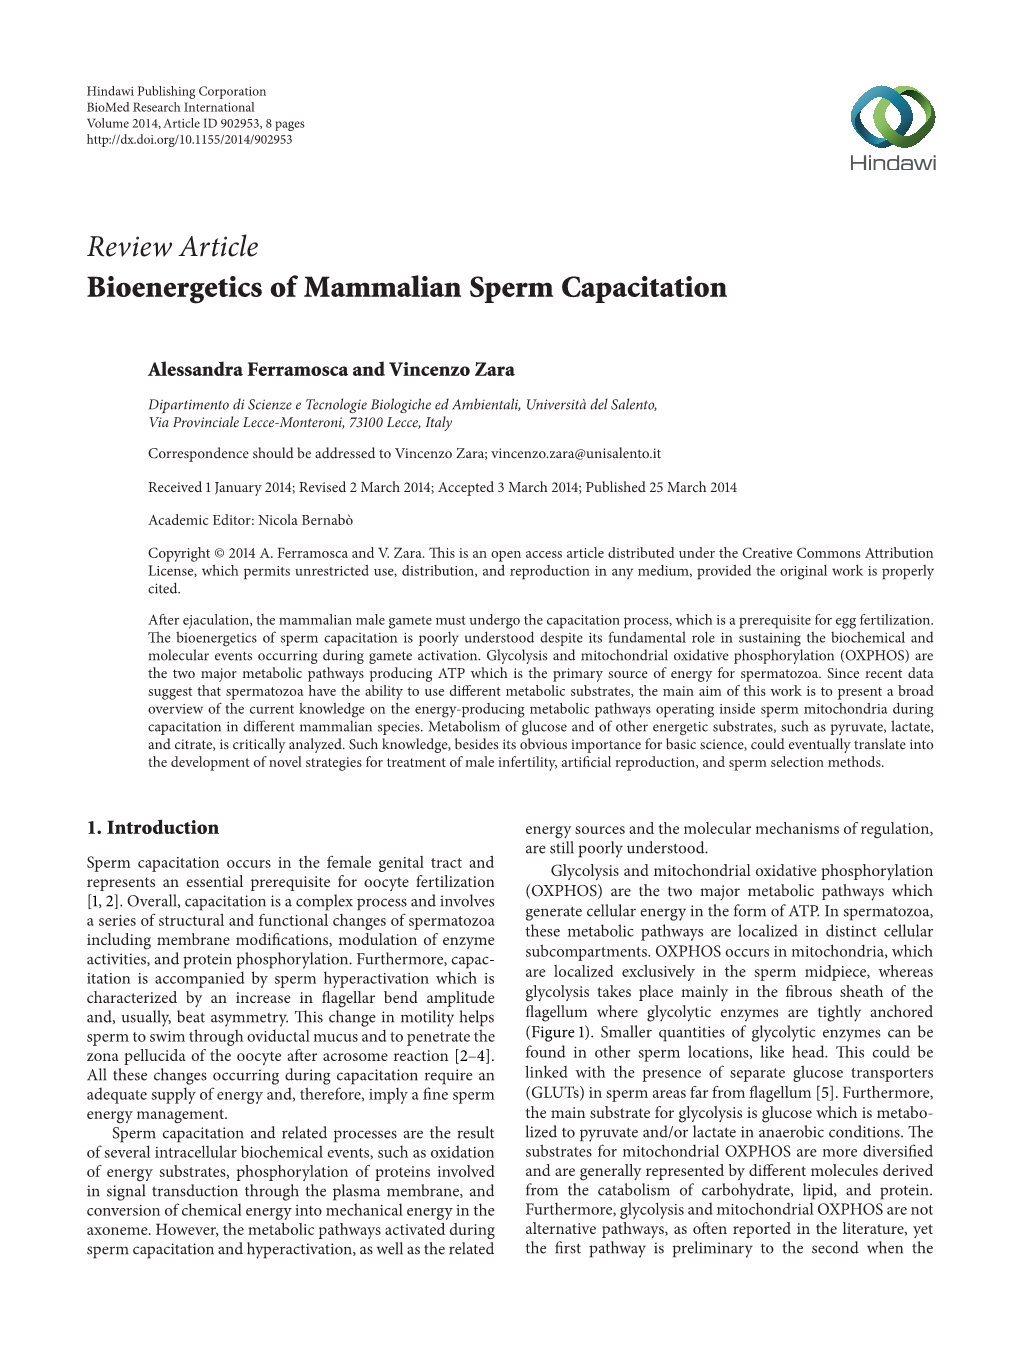 Bioenergetics of Mammalian Sperm Capacitation